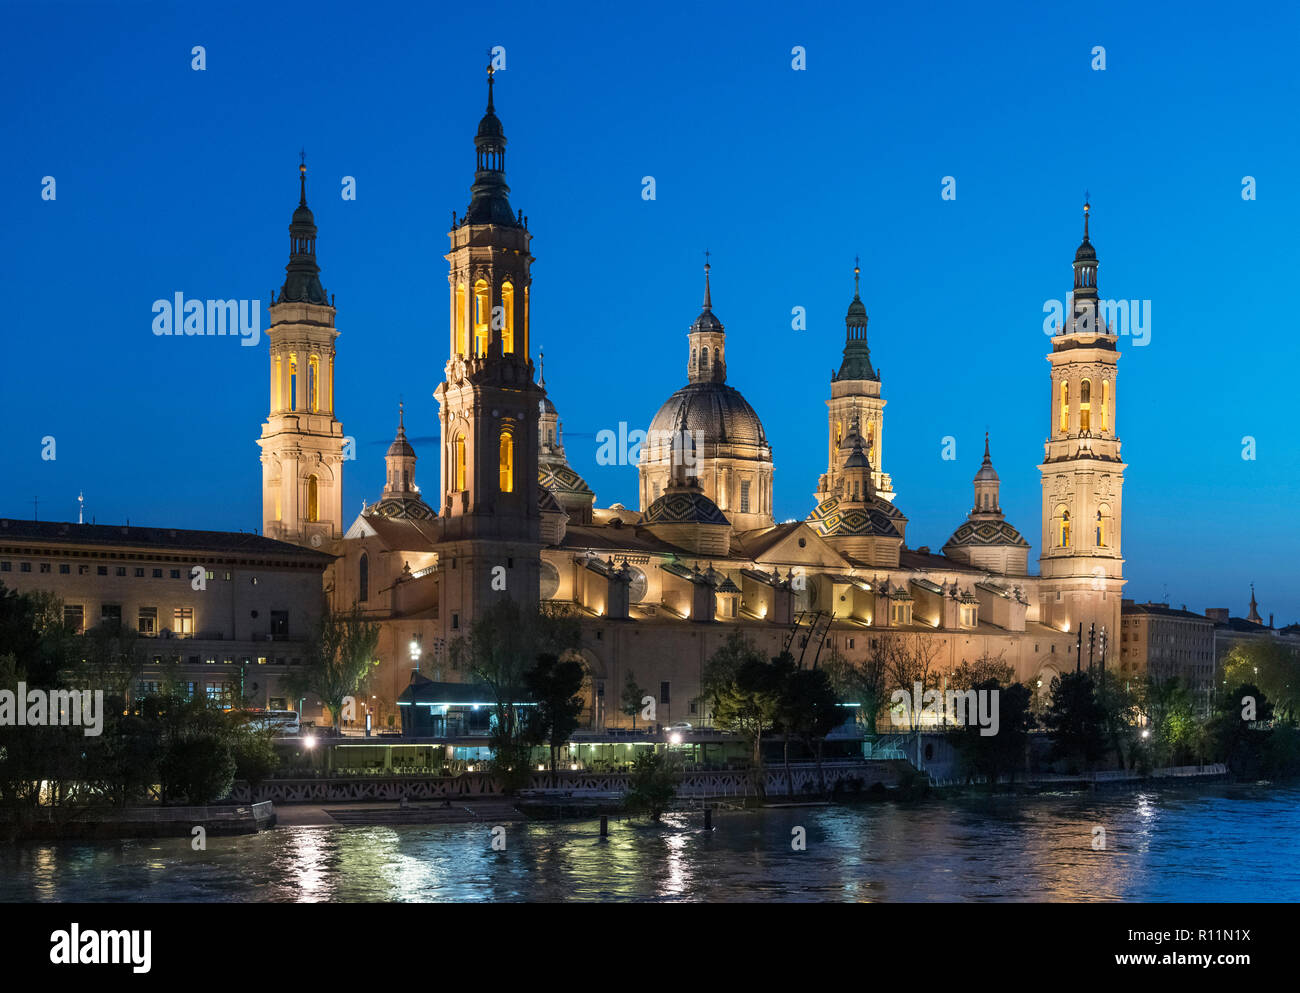 Zaragoza, Spain. View of the Basilica de Nuestra Senora del Pilar (Basilica of Our Lady of the Pillar) and the River Ebro at night, Zaragoza, Spain Stock Photo